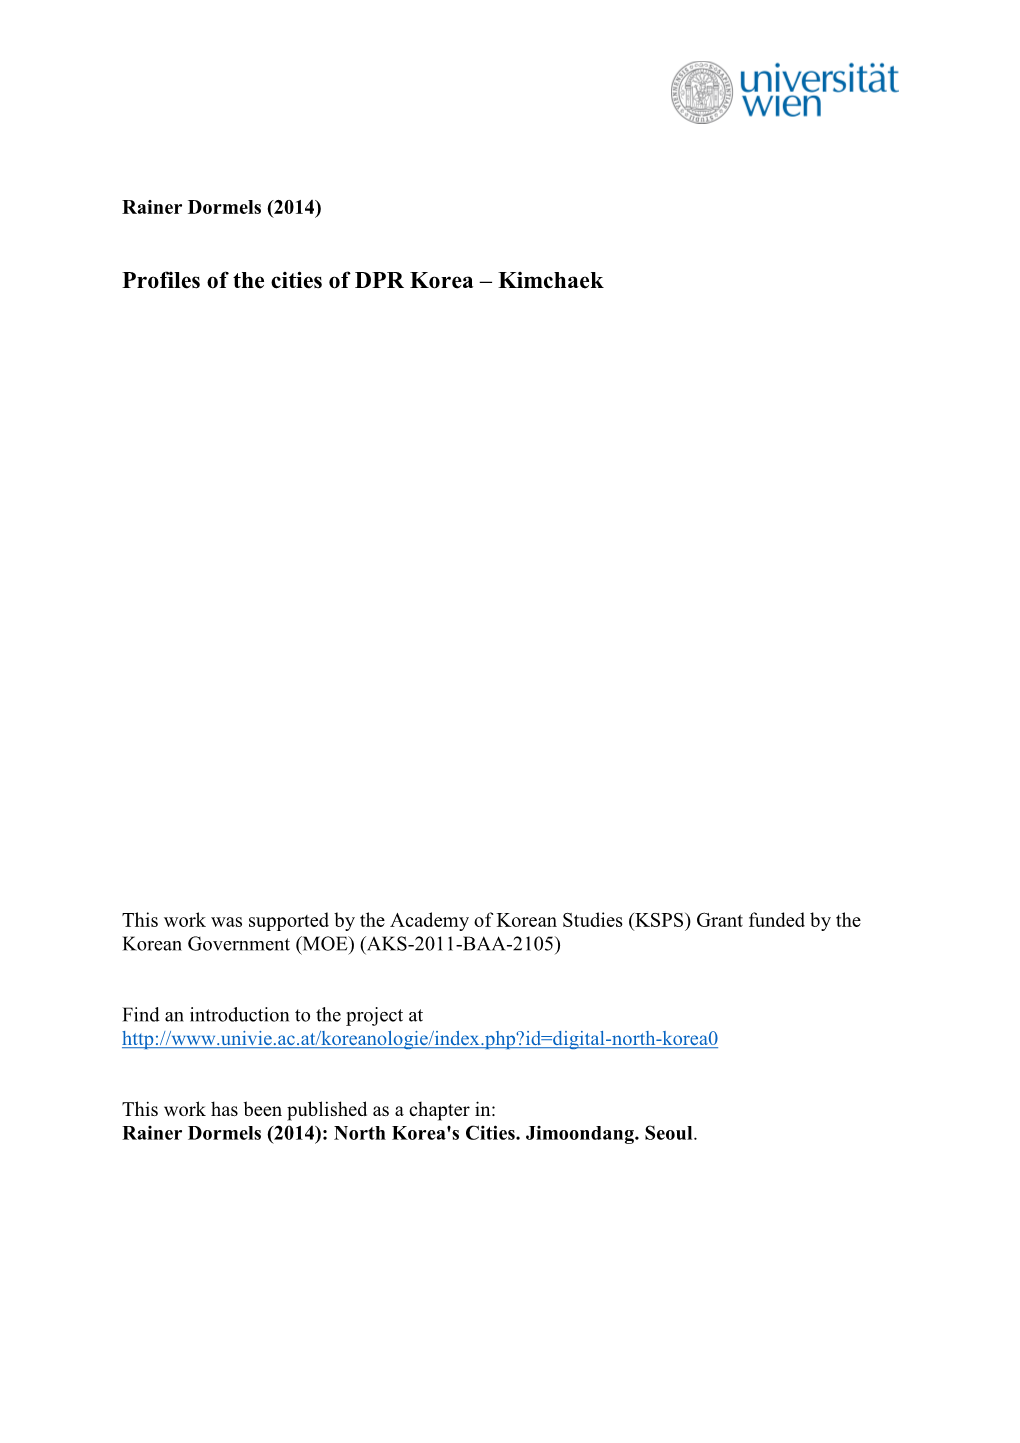 Profiles of the Cities of DPR Korea – Kimchaek